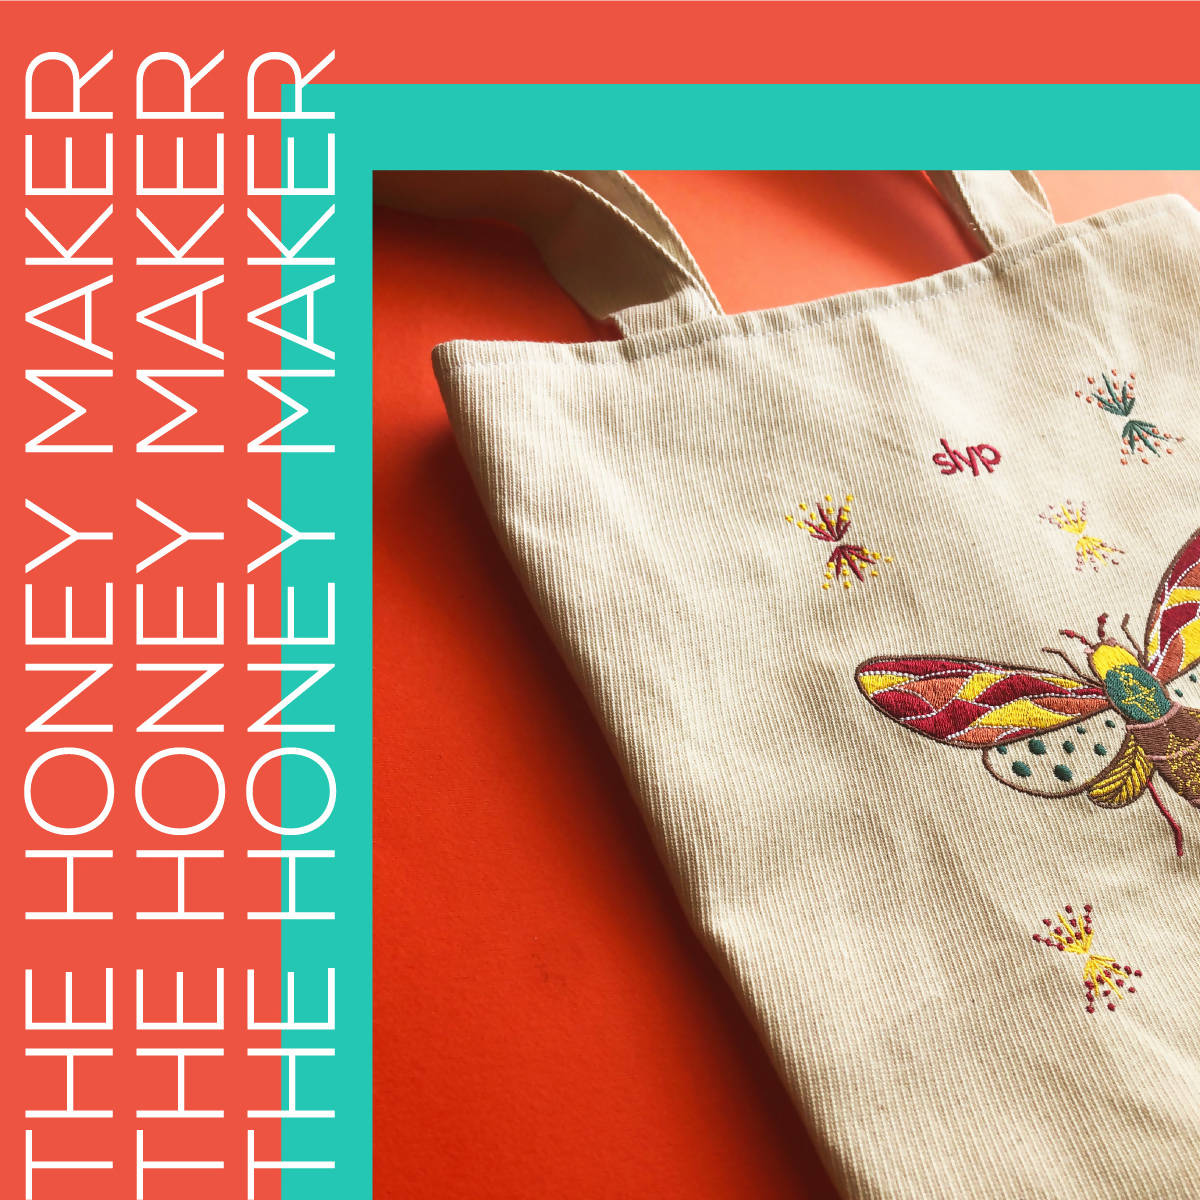 The honey Maker - Tote bag